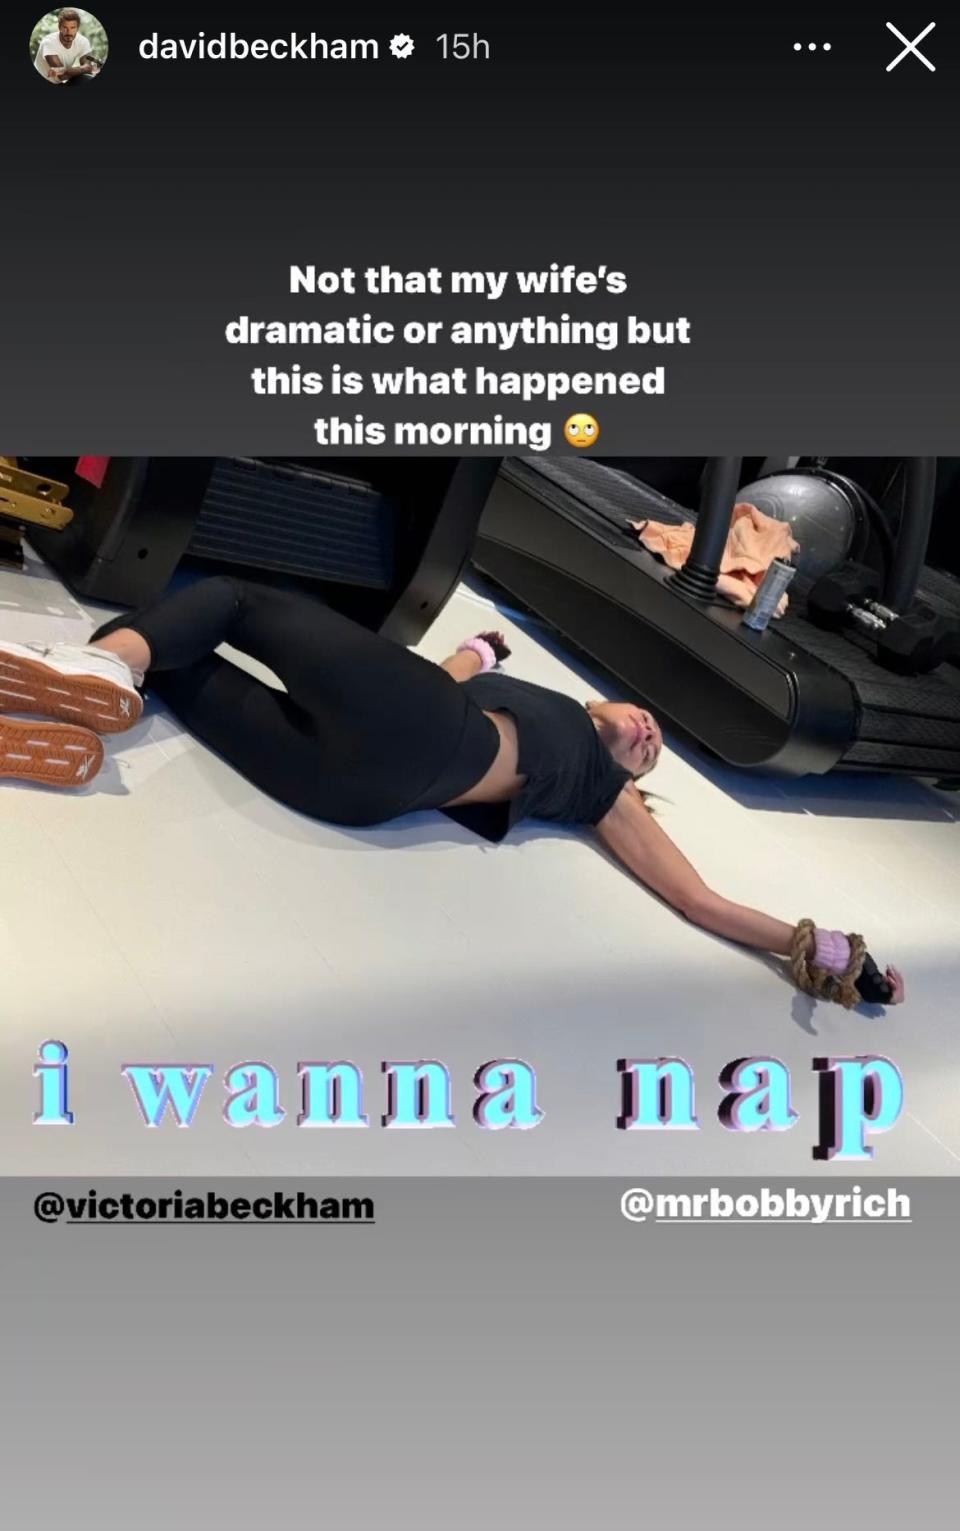 Victoria Beckham lying on the floor in David Beckham's Instagram.